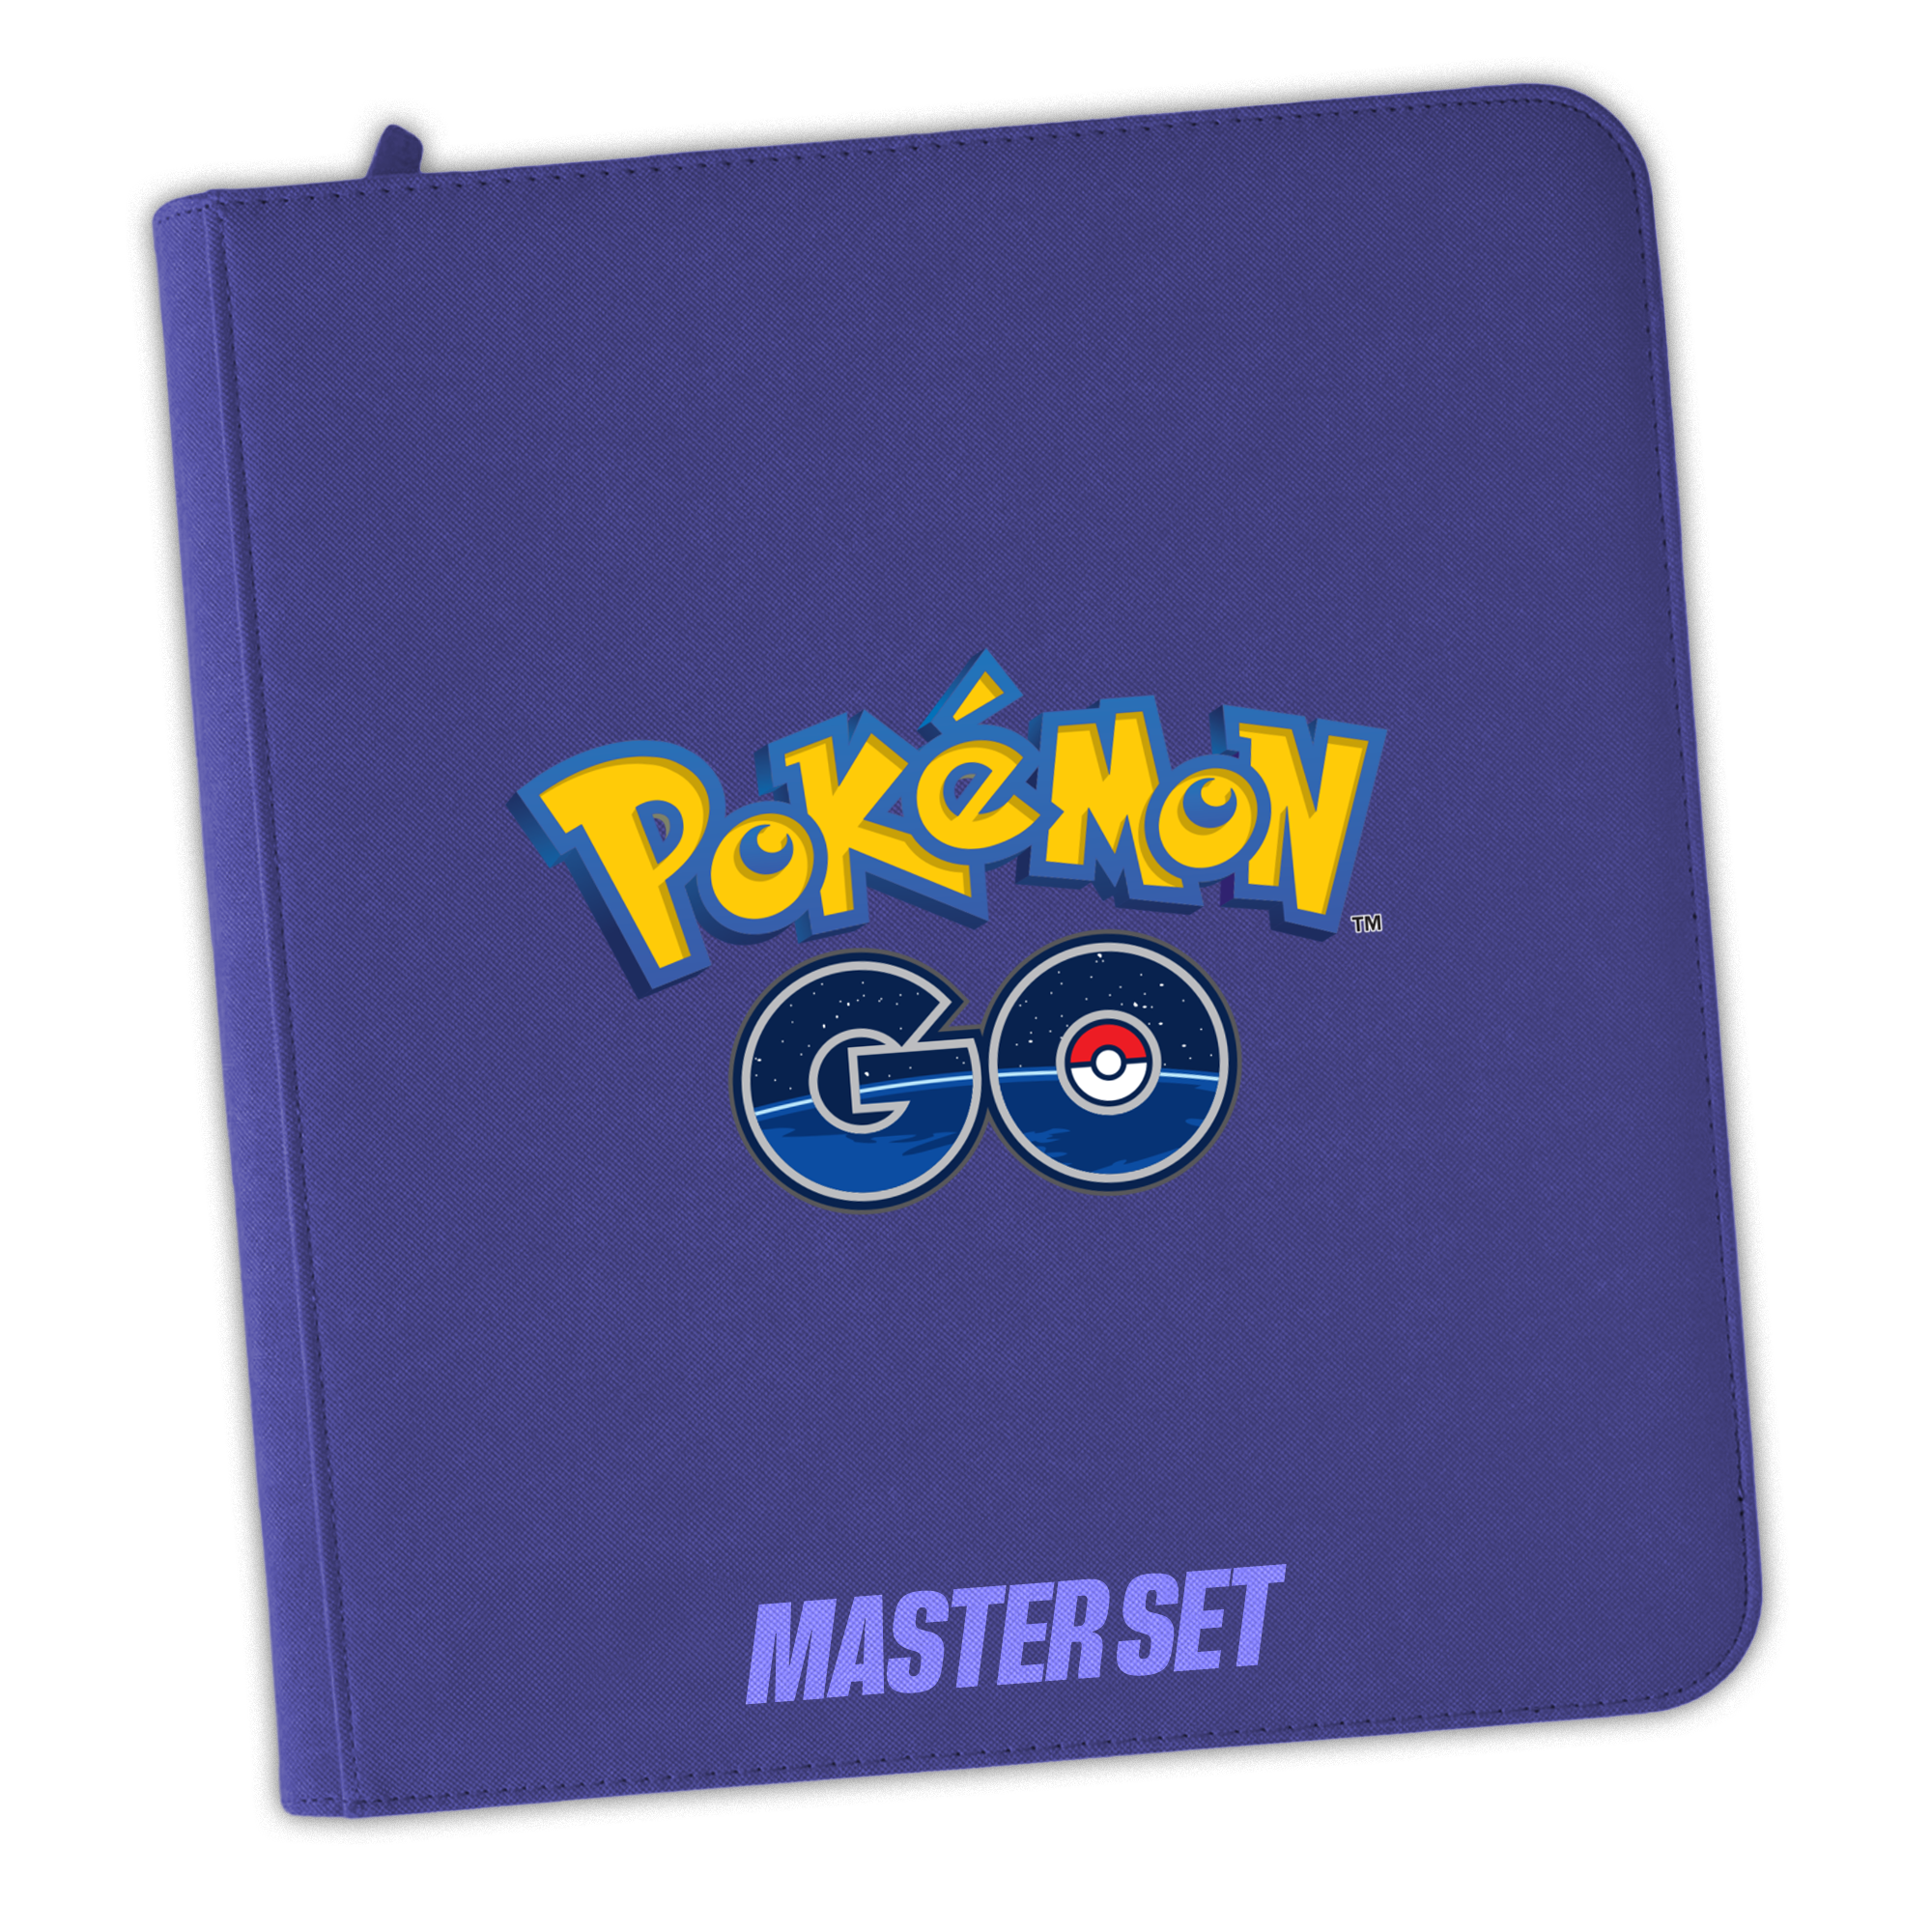 [MASTER SET] Master Set - EB10.5 - Pokemon Go [FR]